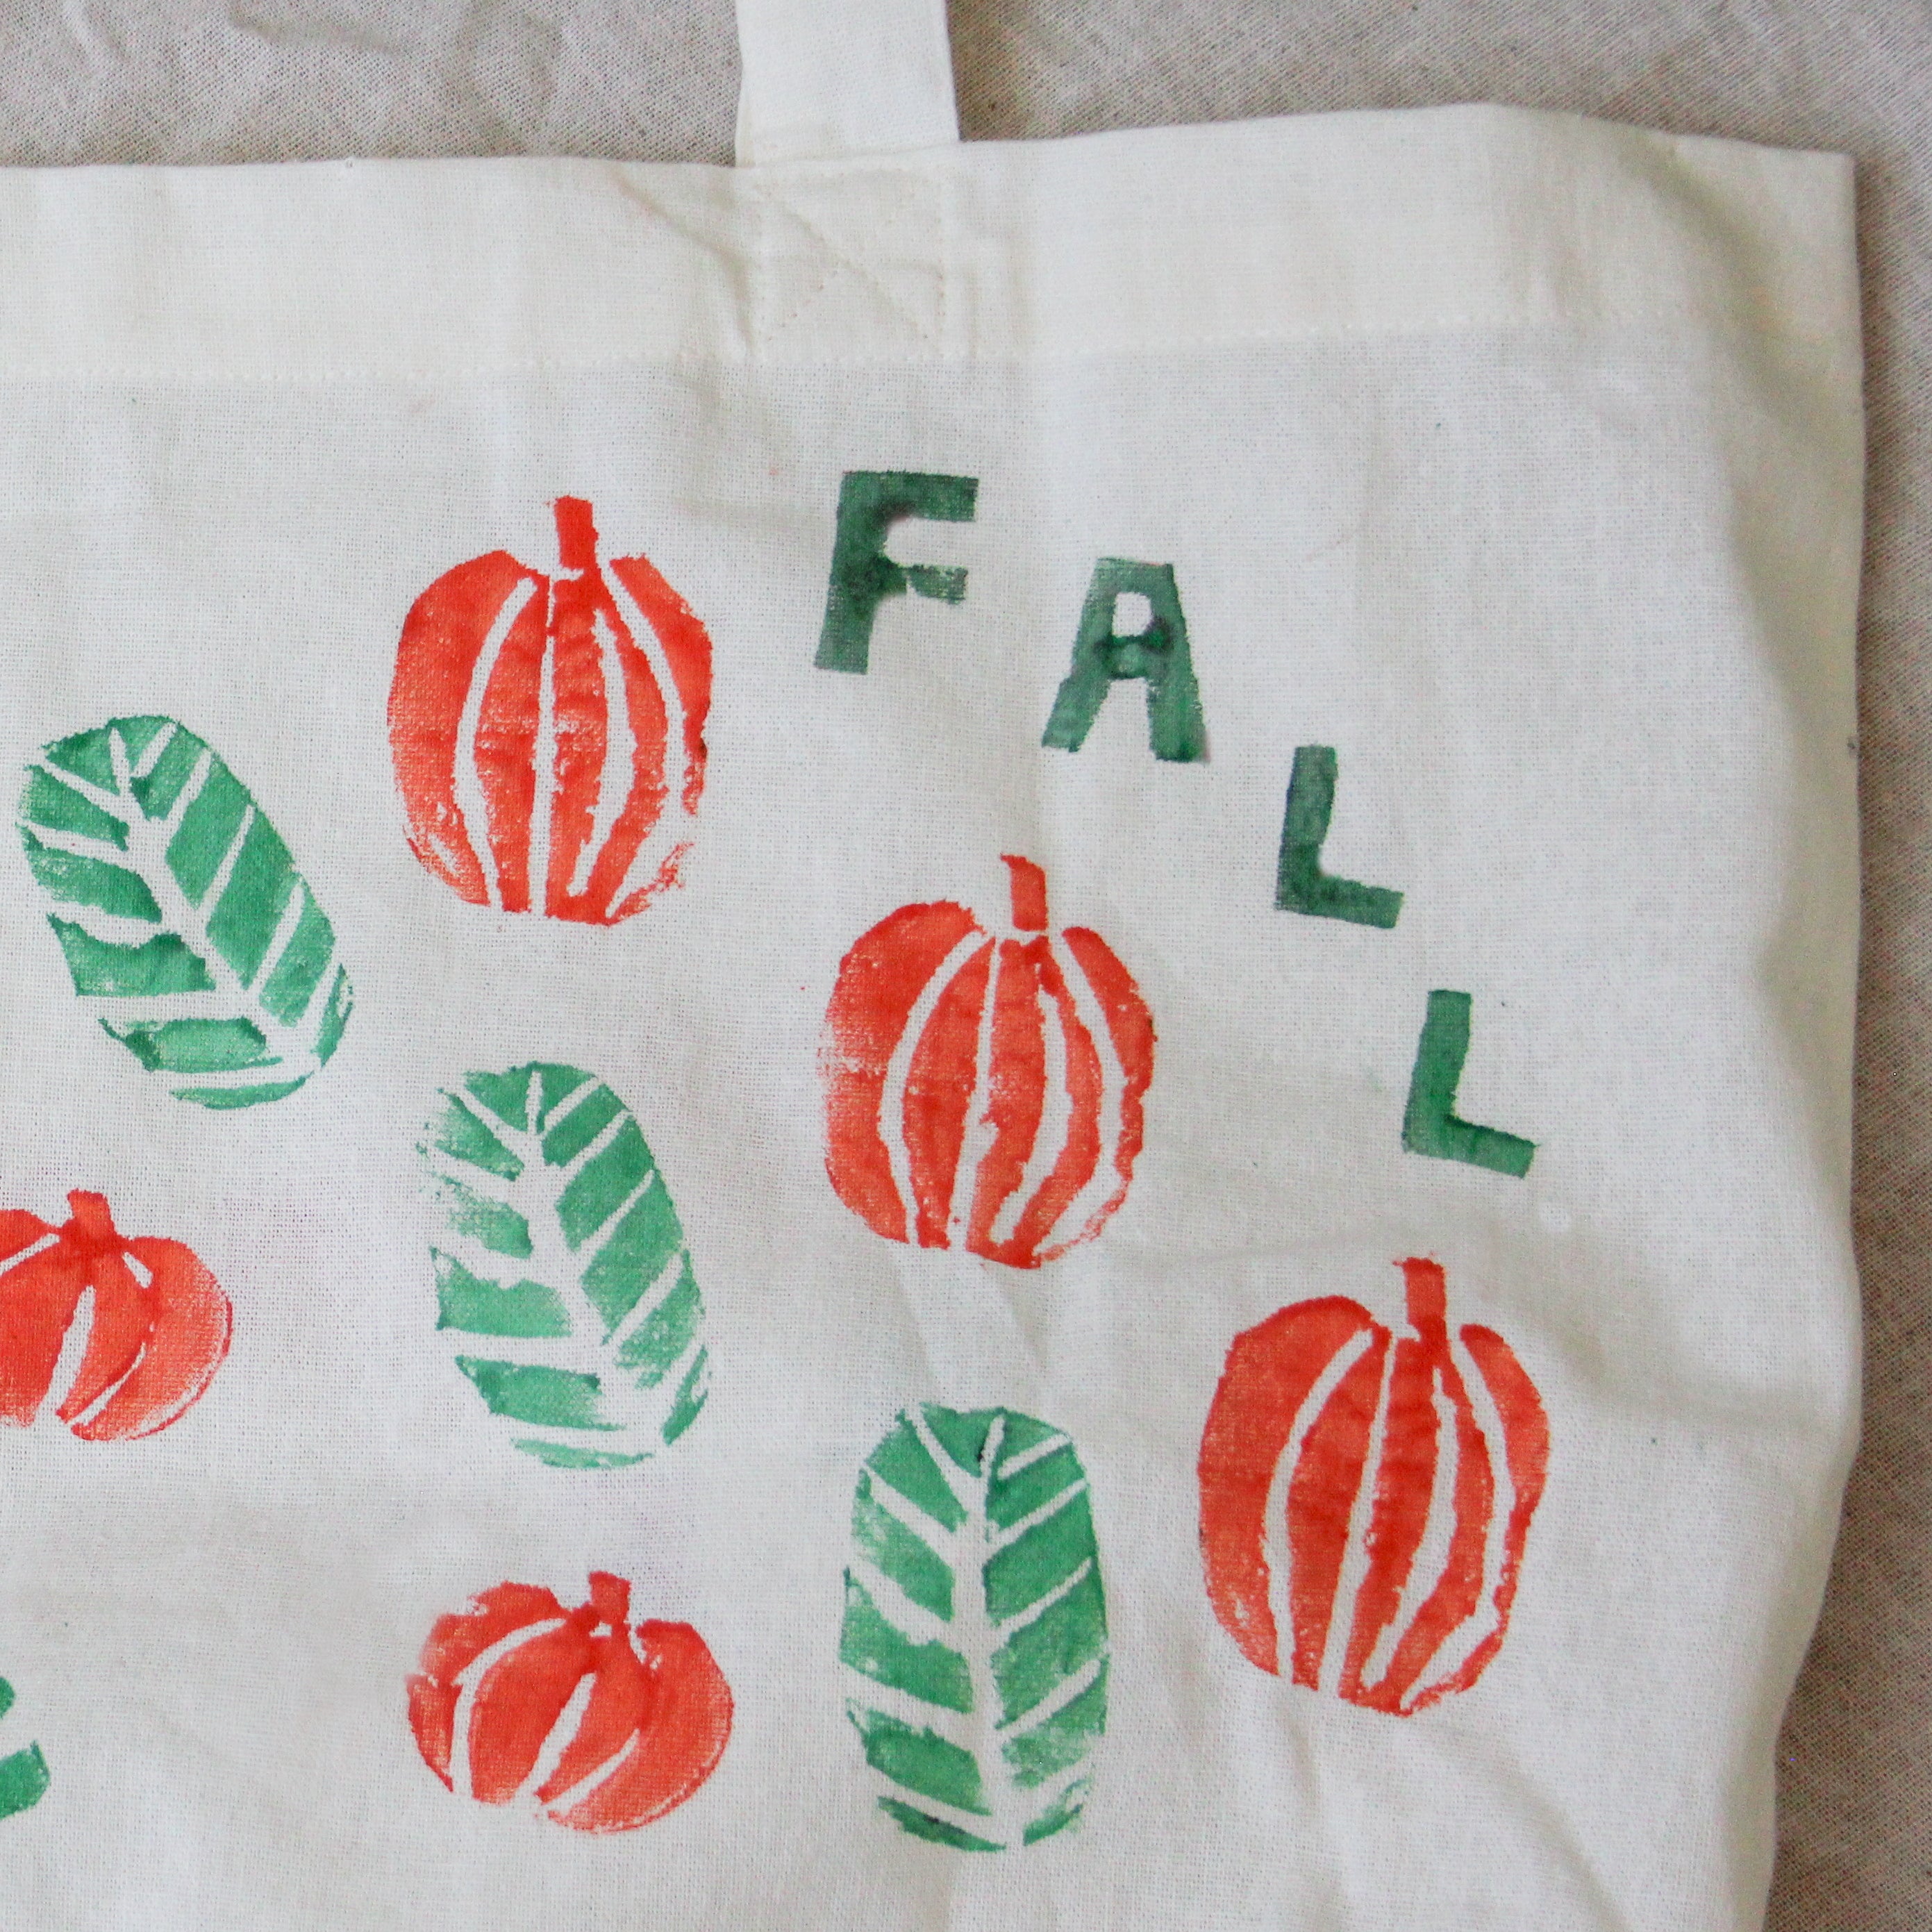 A potato printed bag says fall with leaves and pumpkins.